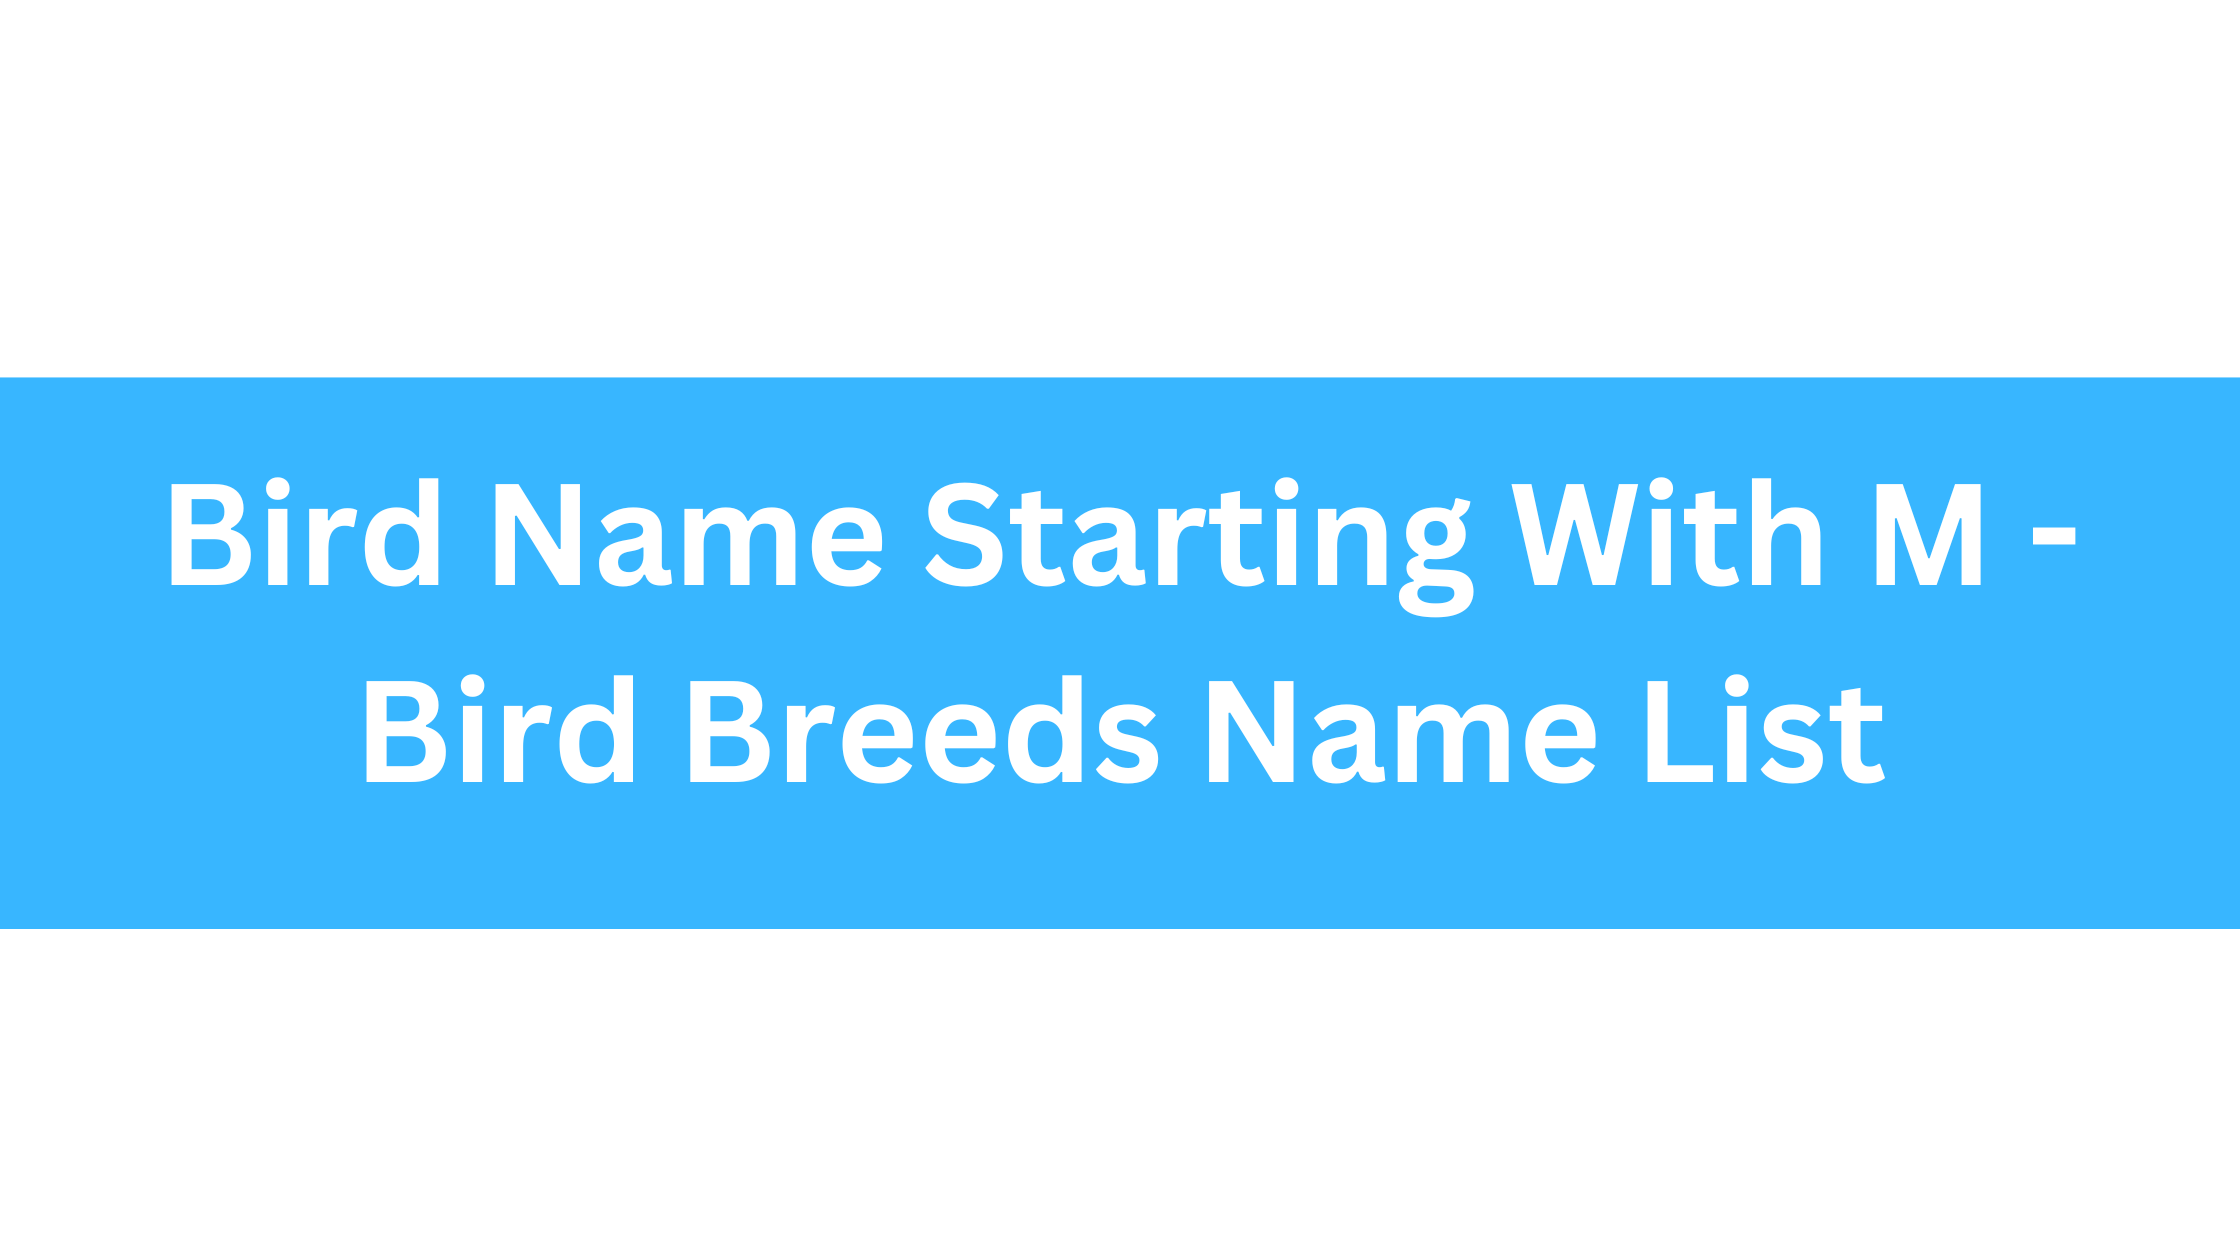 Bird Name Starting With M